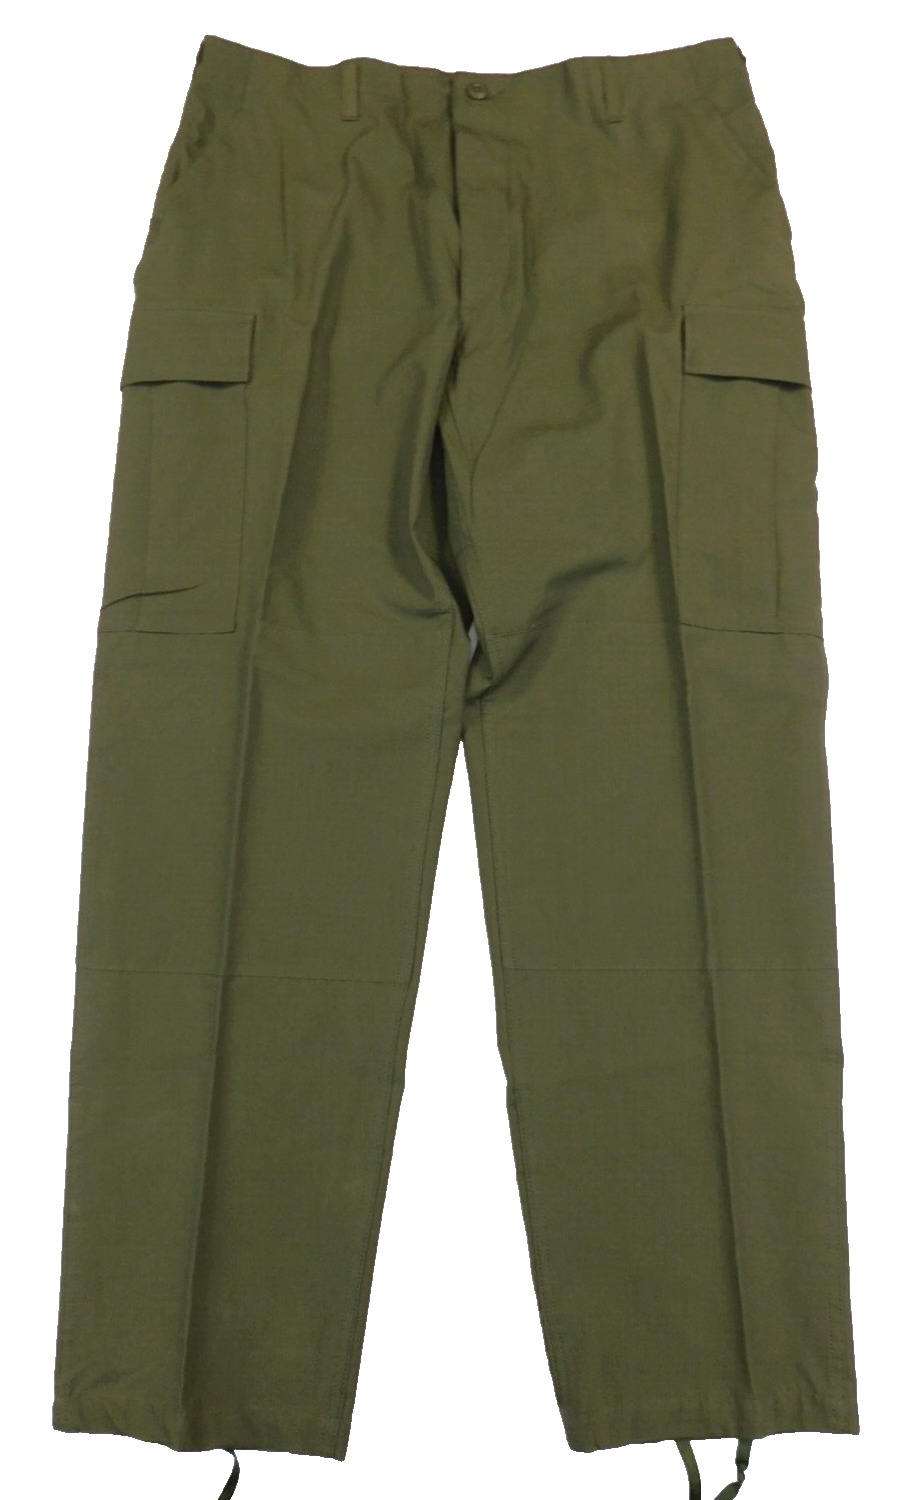 Propper Green Tactical Pants Large Regular US Combat Cotton Ripstop Trousers